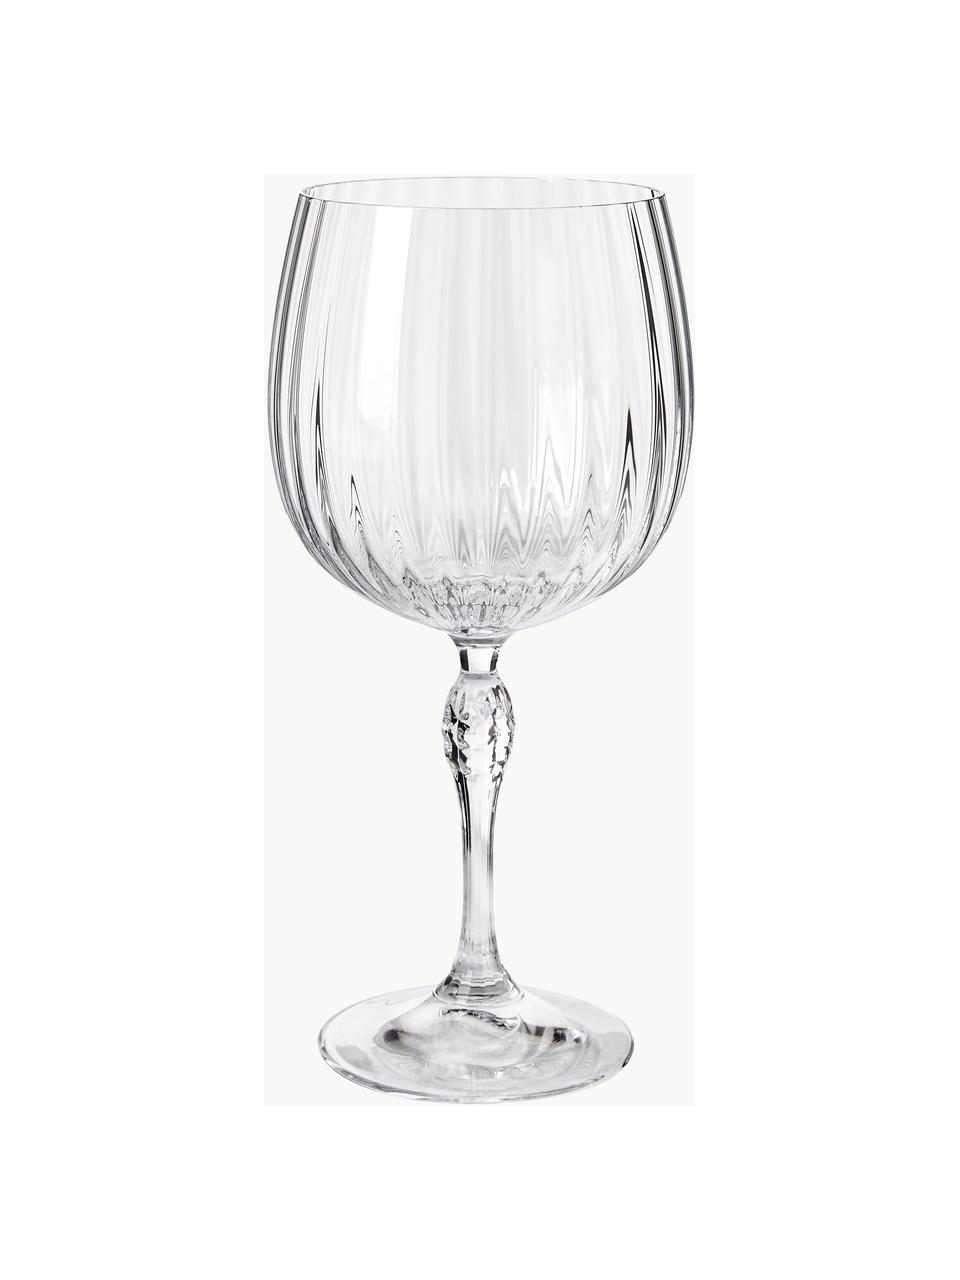 Gingläser America's Cocktail mit Rillenstruktur, 4 Stück, Glas, Transparent, Ø 10 x H 23 cm, 700 ml